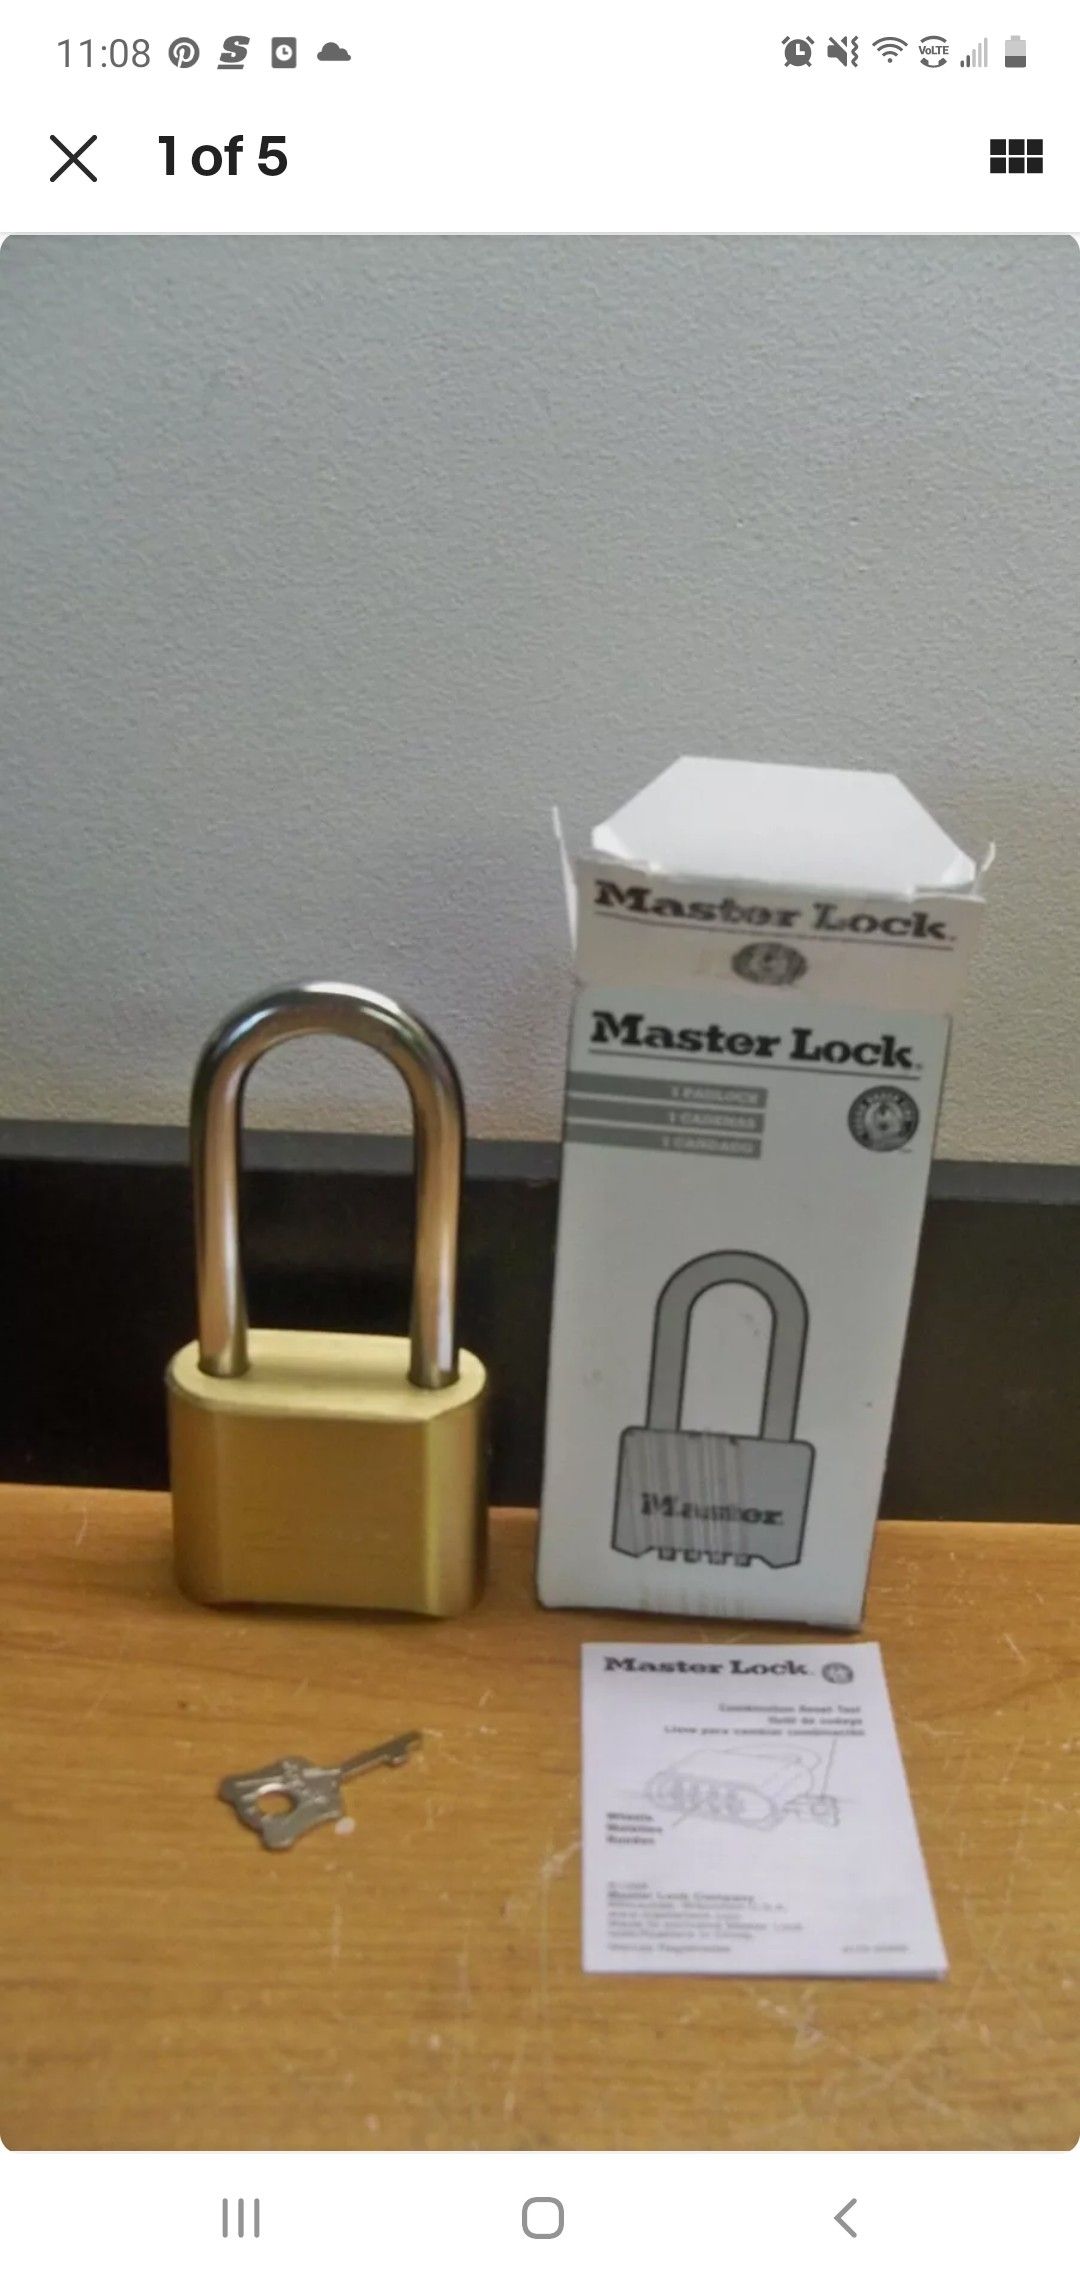 Masterlock 175 LH 36 available